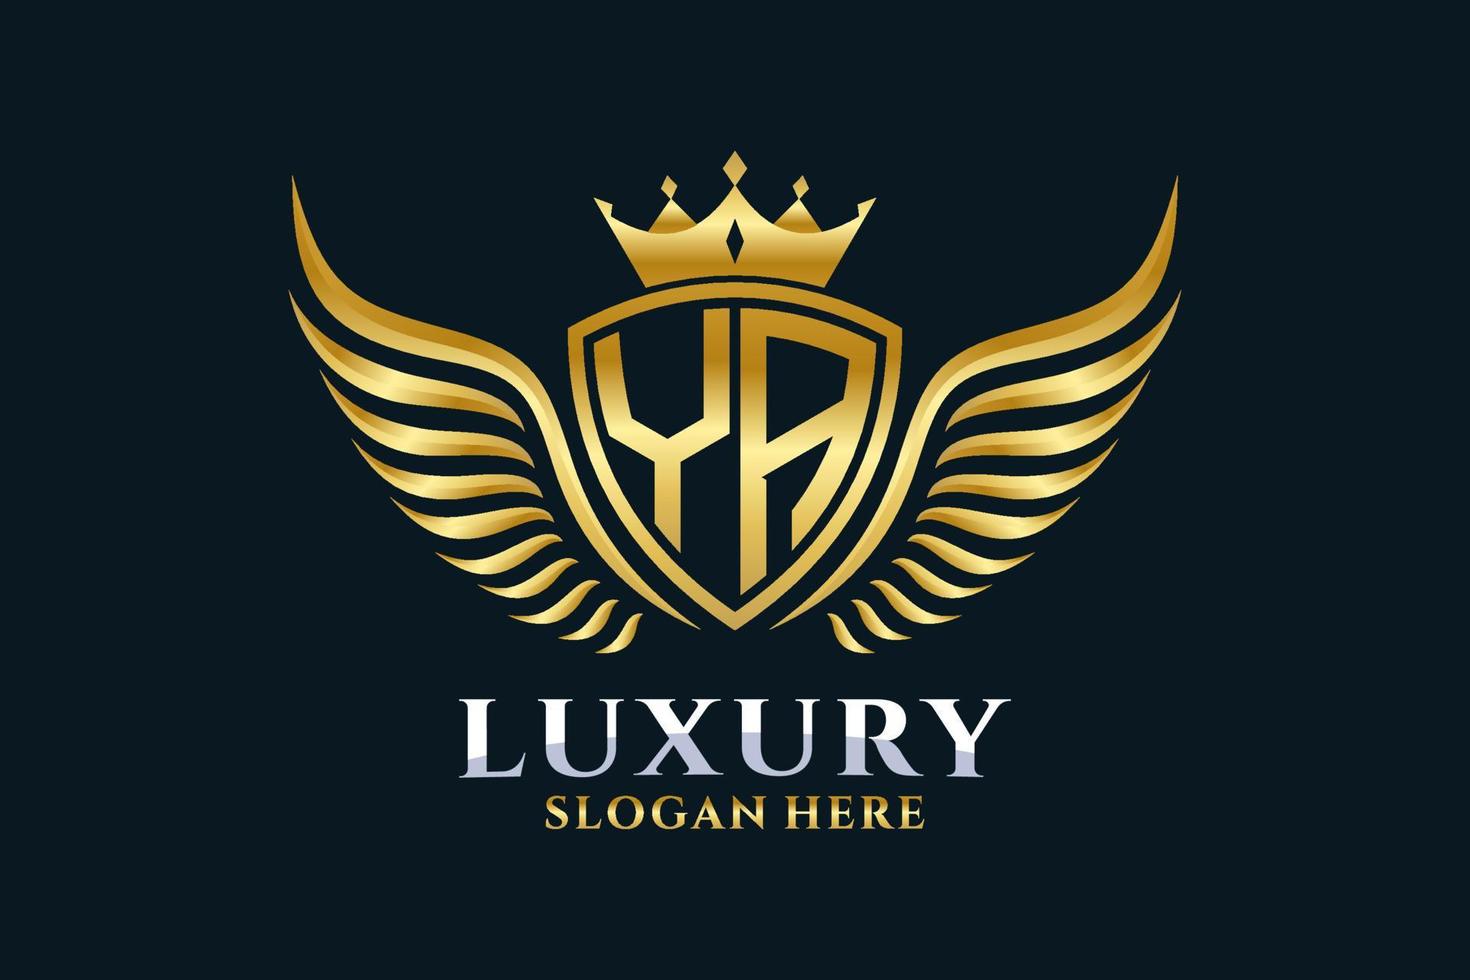 luxe Koninklijk vleugel brief ja kam goud kleur logo vector, zege logo, kam logo, vleugel logo, vector logo sjabloon.